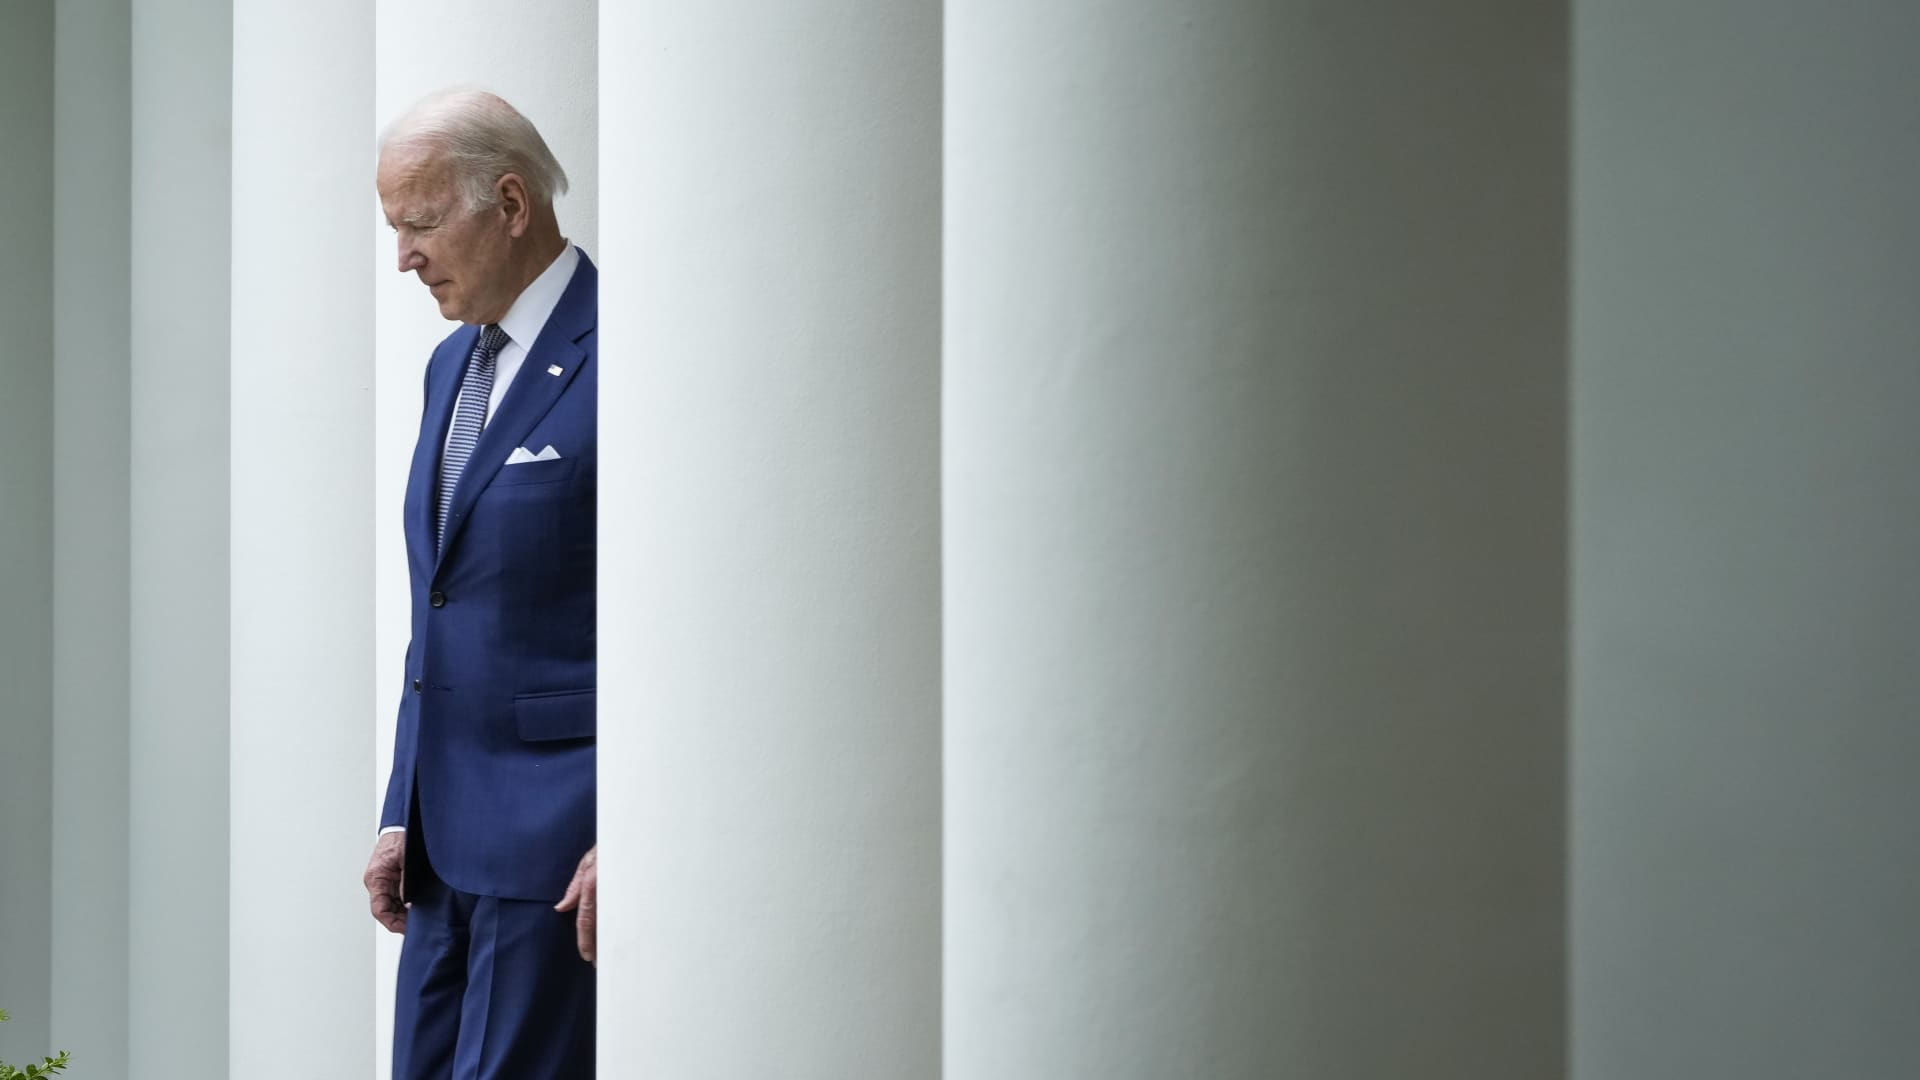 U.S. President Joe Biden arrives to speak in the Rose Garden of the White House on May 13, 2022 in Washington, DC.